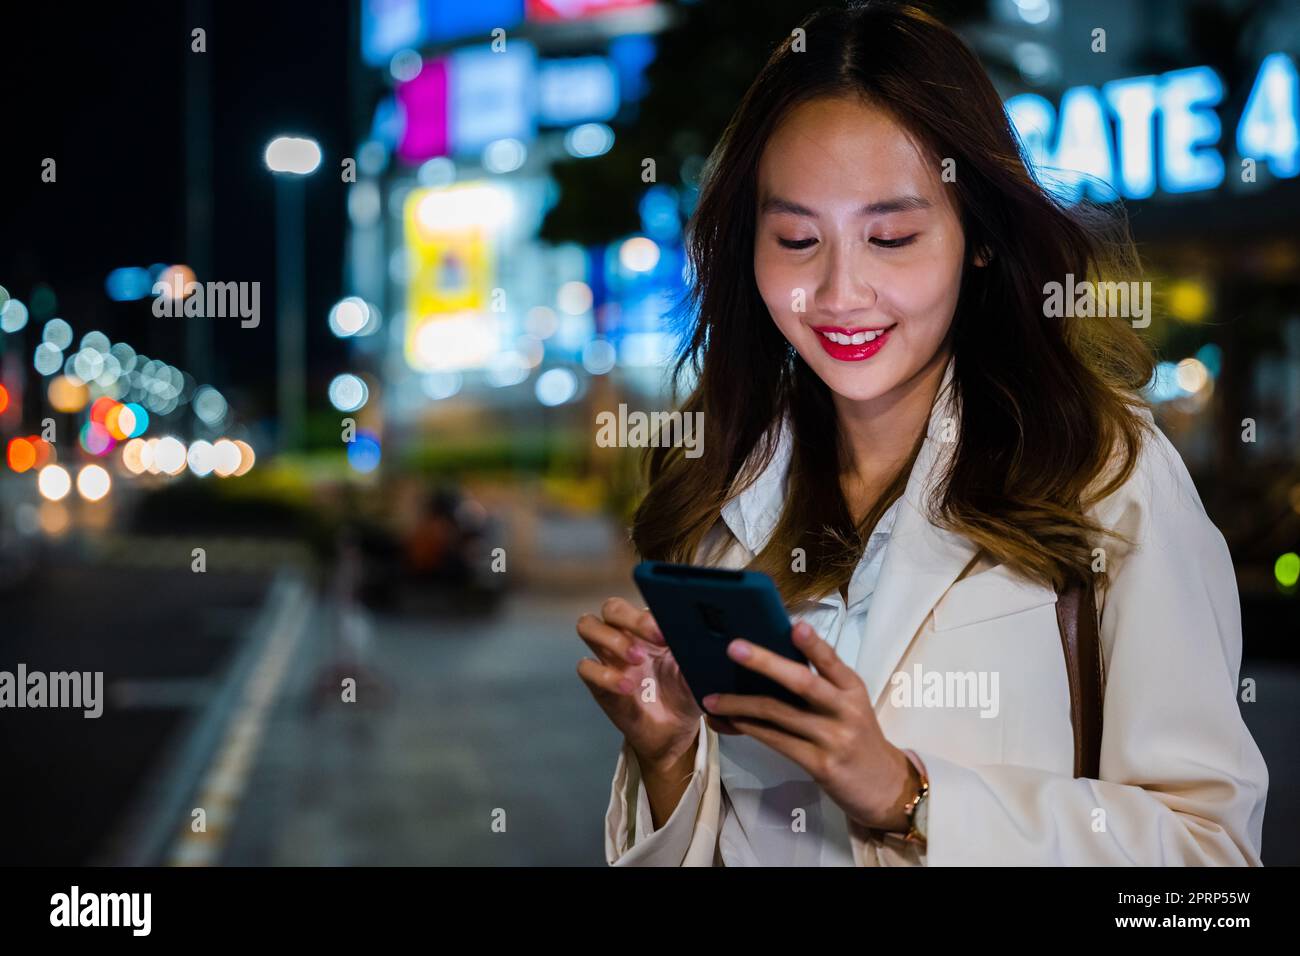 Business woman using mobile phone walking through night city street Stock Photo